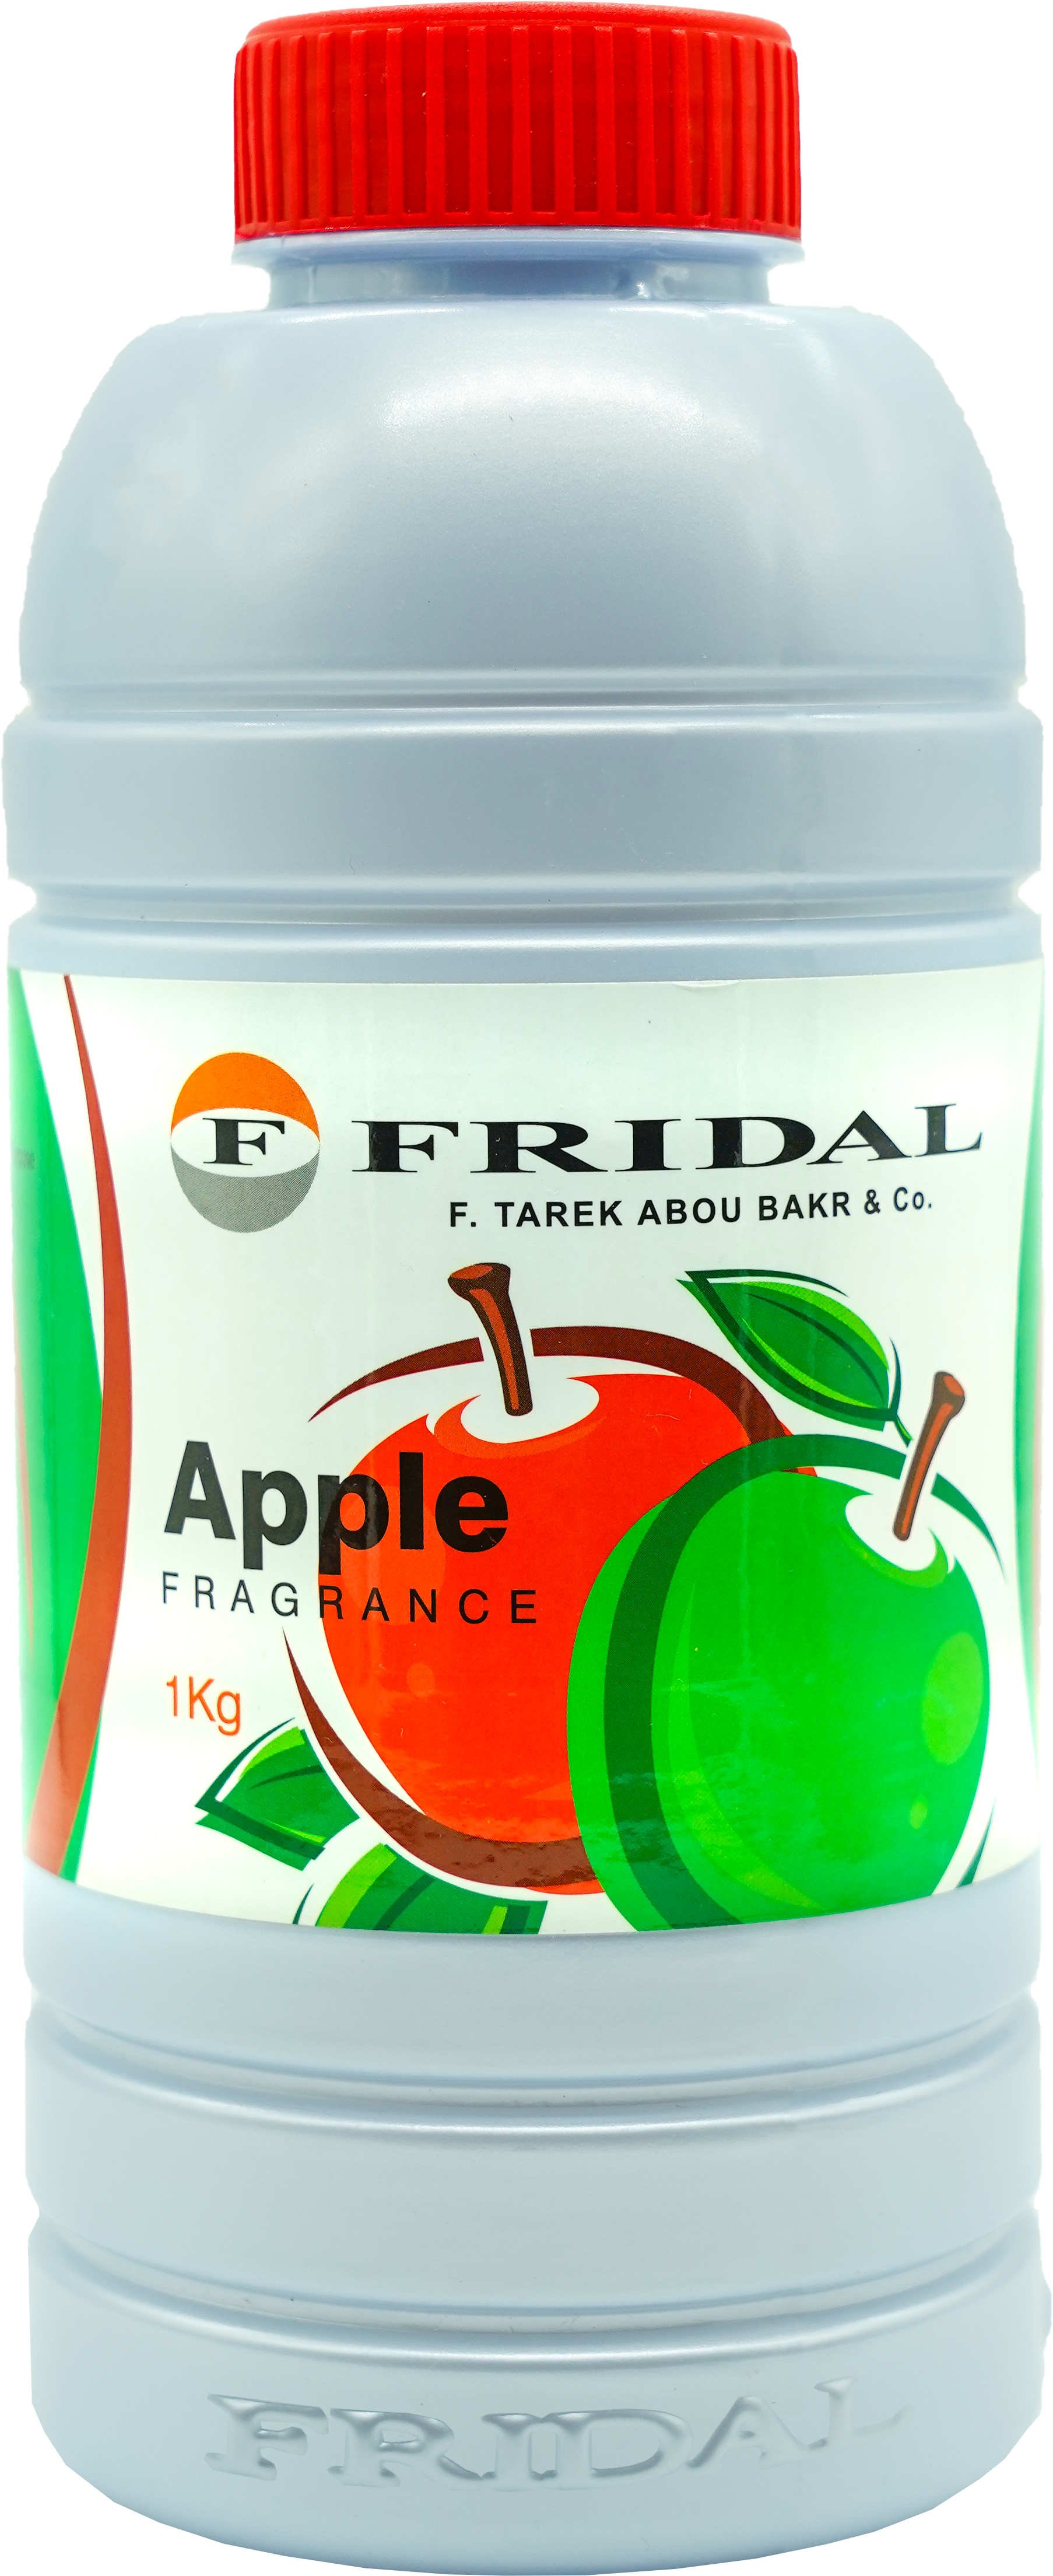 Multi-purpose usage Fragrance "Apple 1kg"